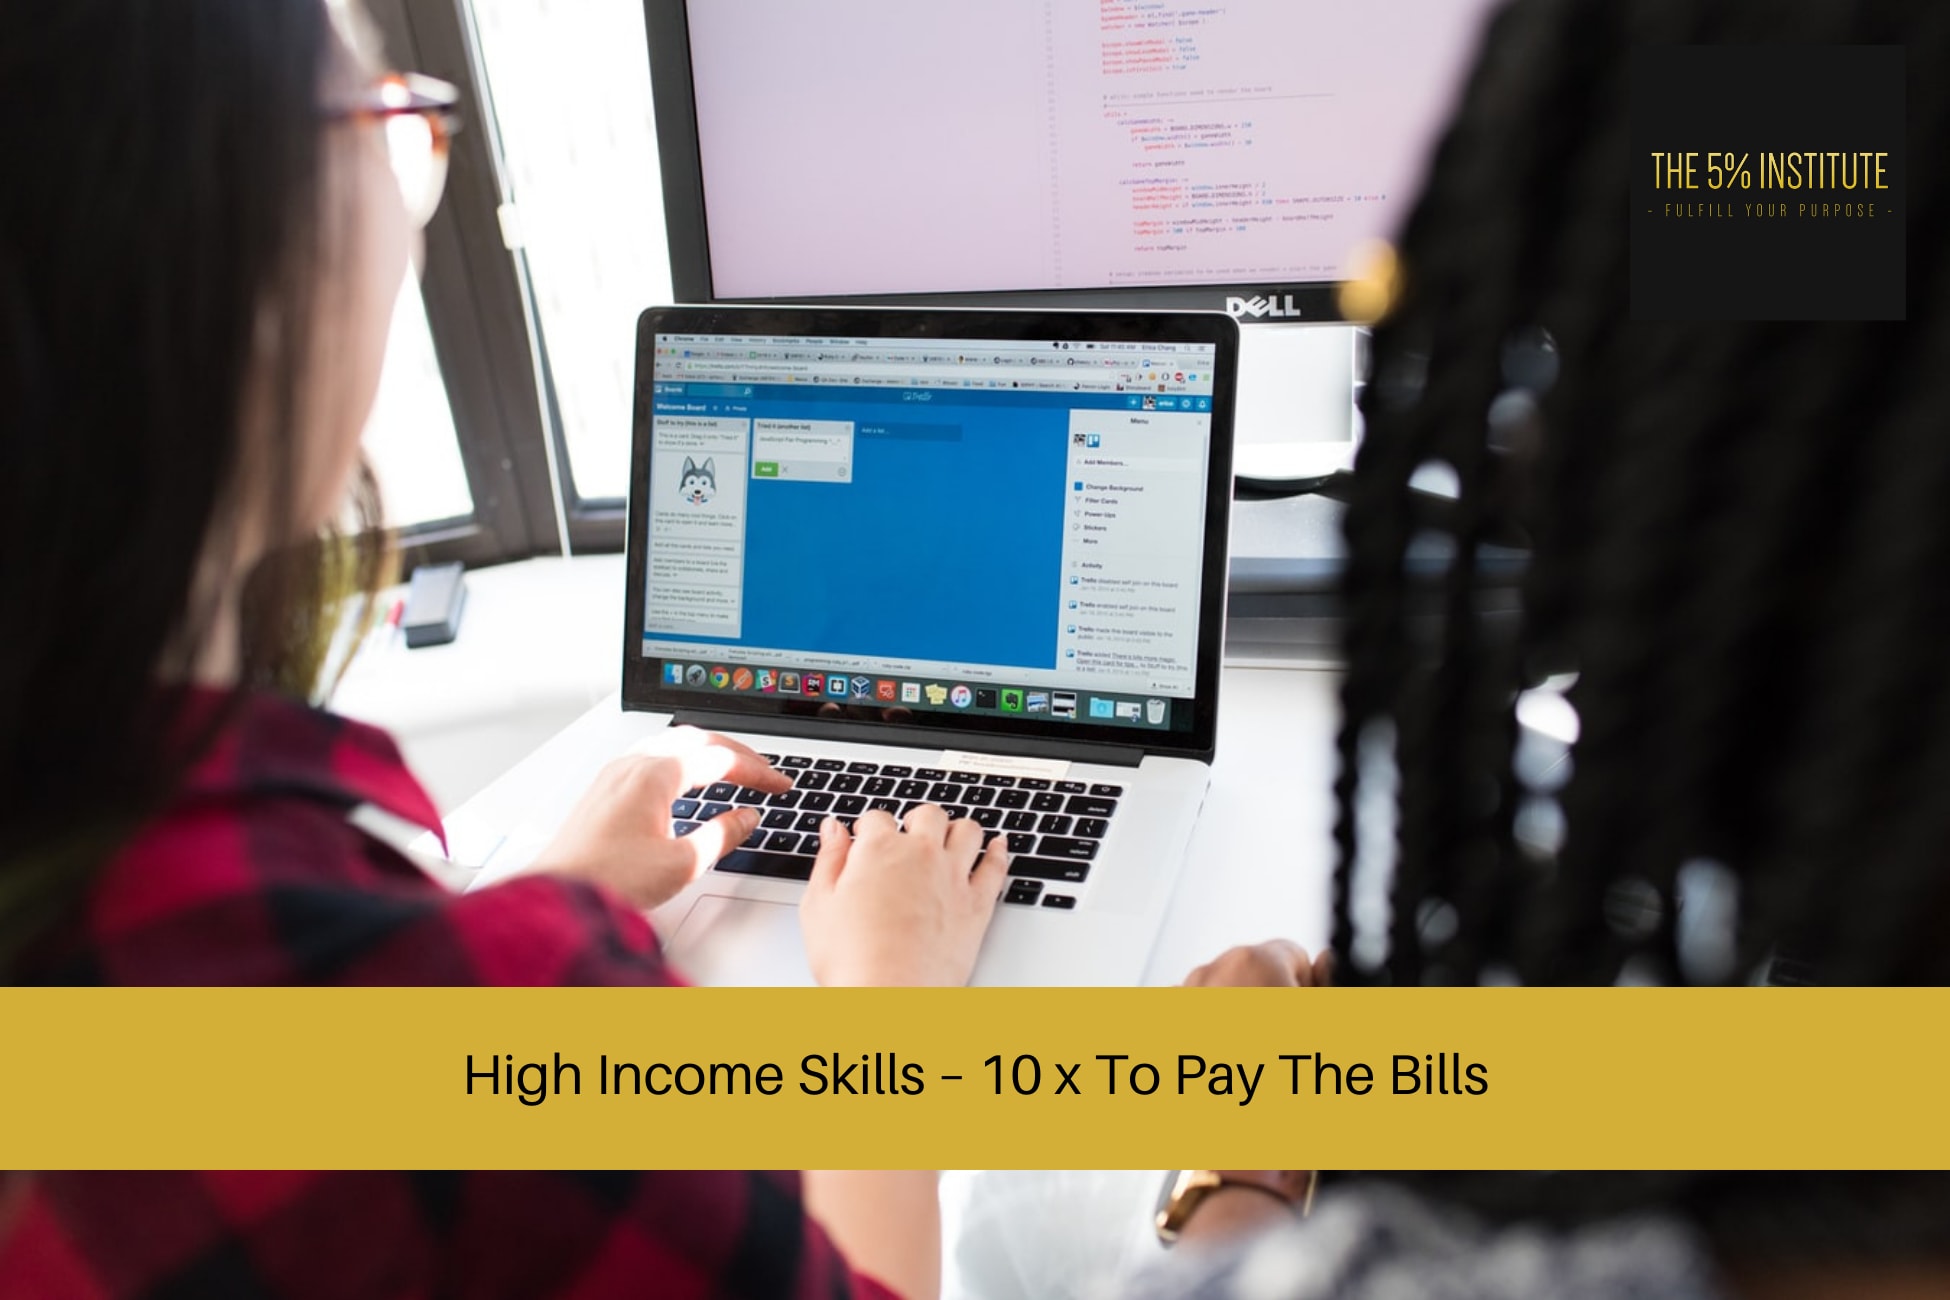 list of high income skills